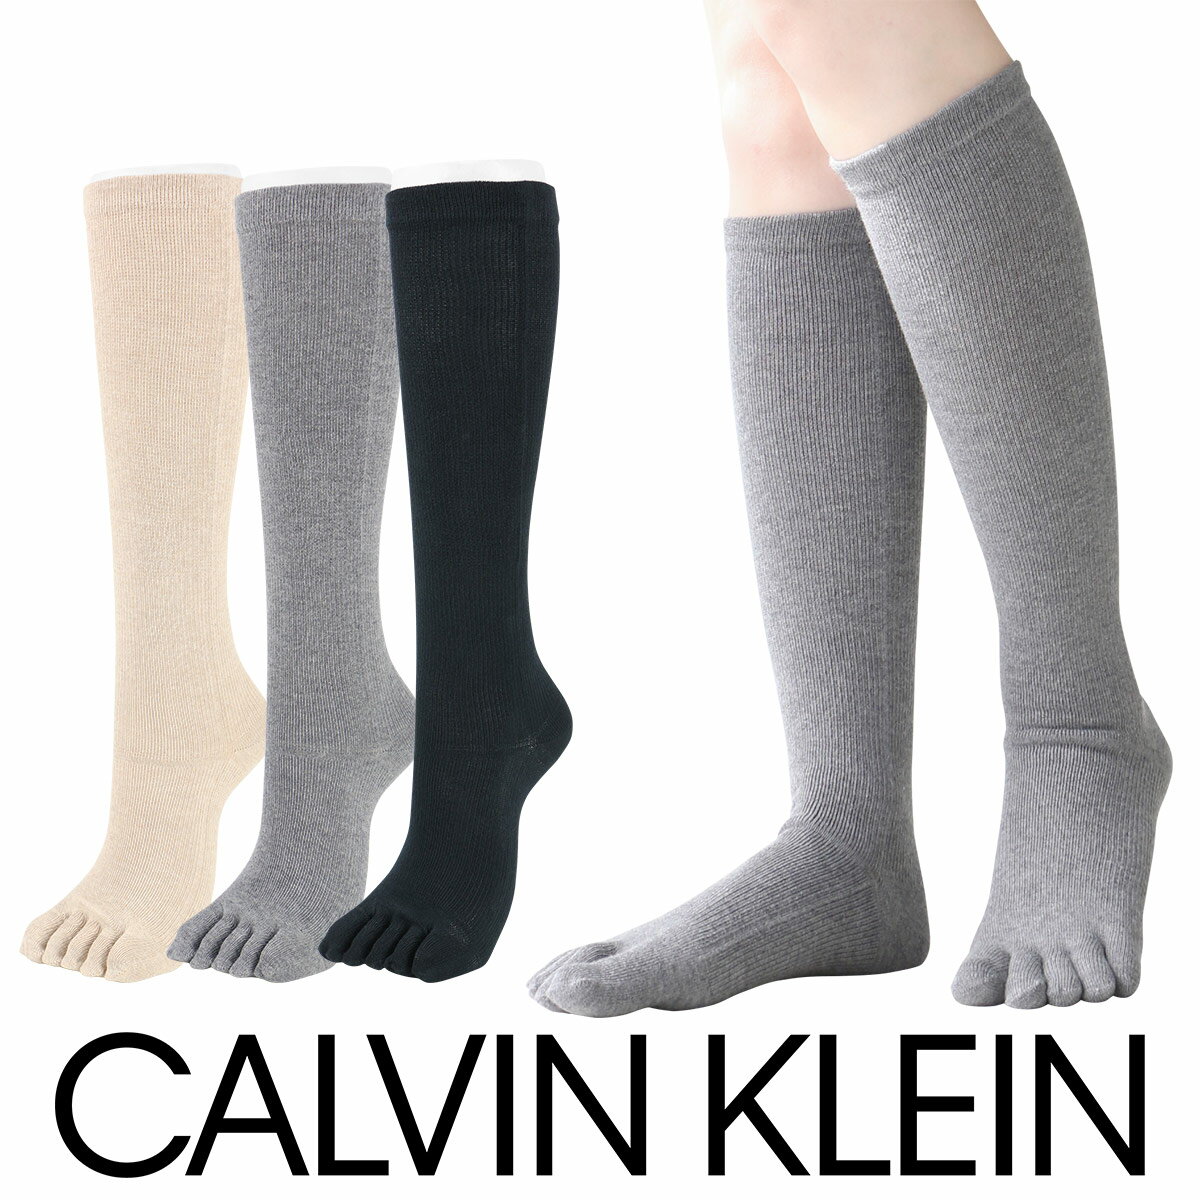 Calvin Klein （ カルバンクライン ）綿混 着圧 （20hPa） ハイソックス丈 5本指 レディス ソックス つま先かかとに消臭糸使用引き締め効果 女性 レディス 靴下 3255-965 サポートフィット ホワイトデー お返し プレゼント